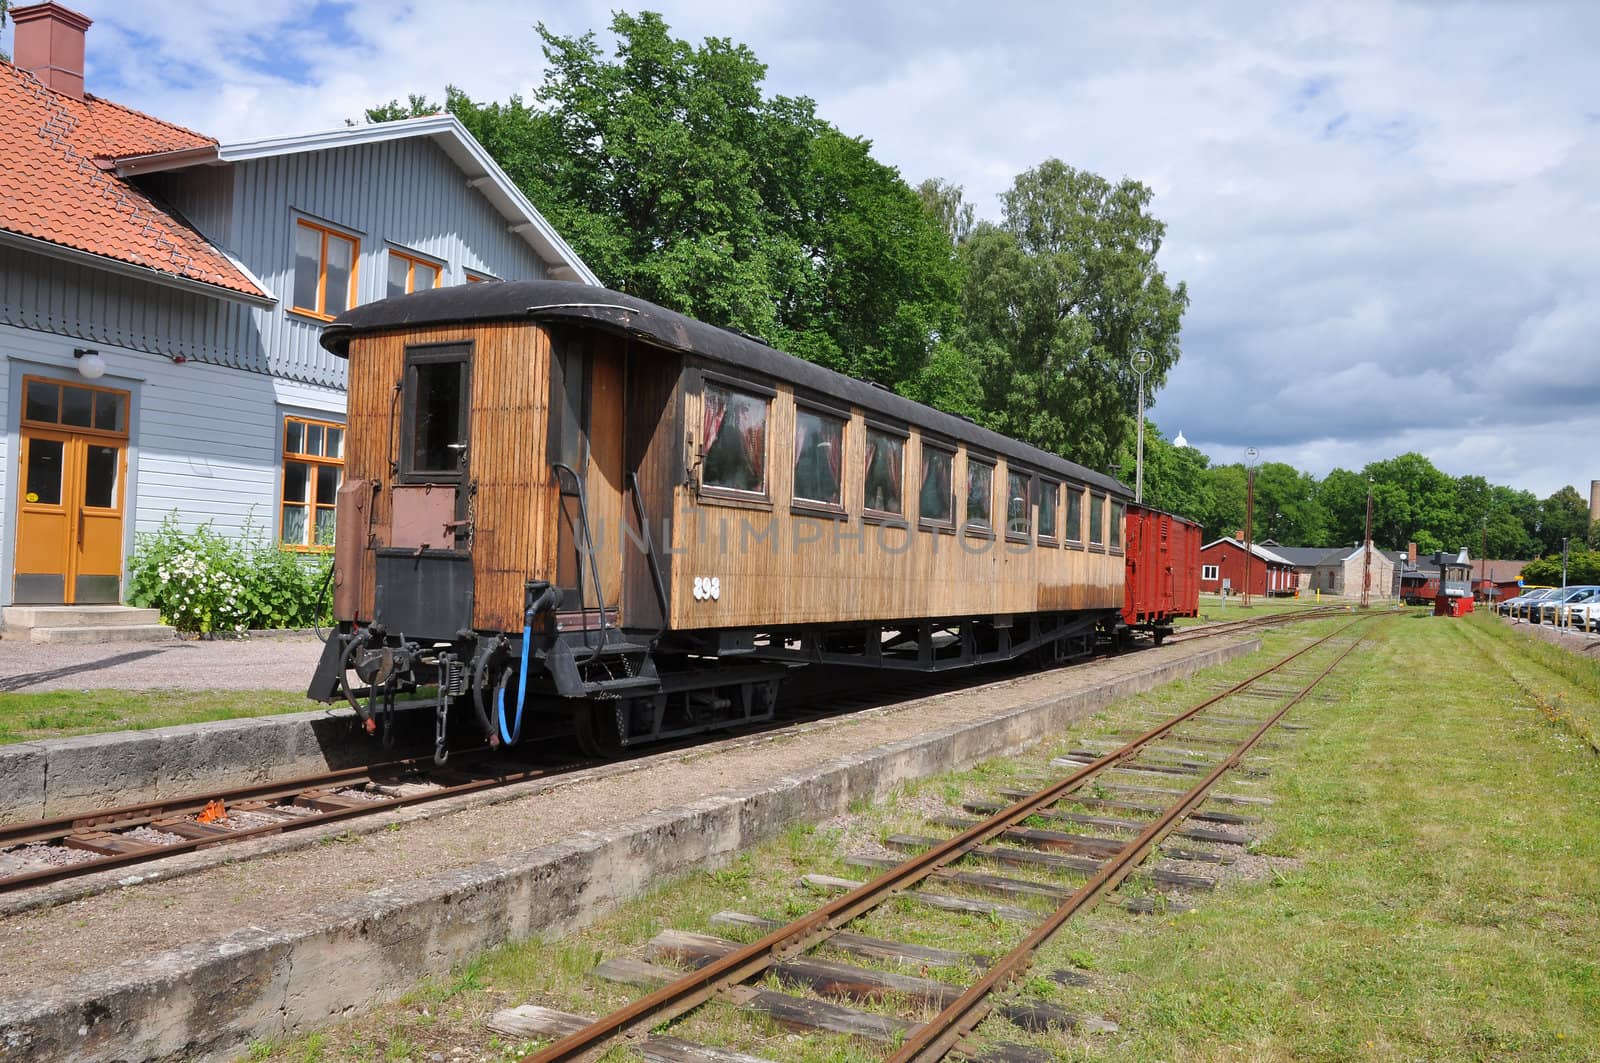 Old passenger train or rail car at station in Sweden